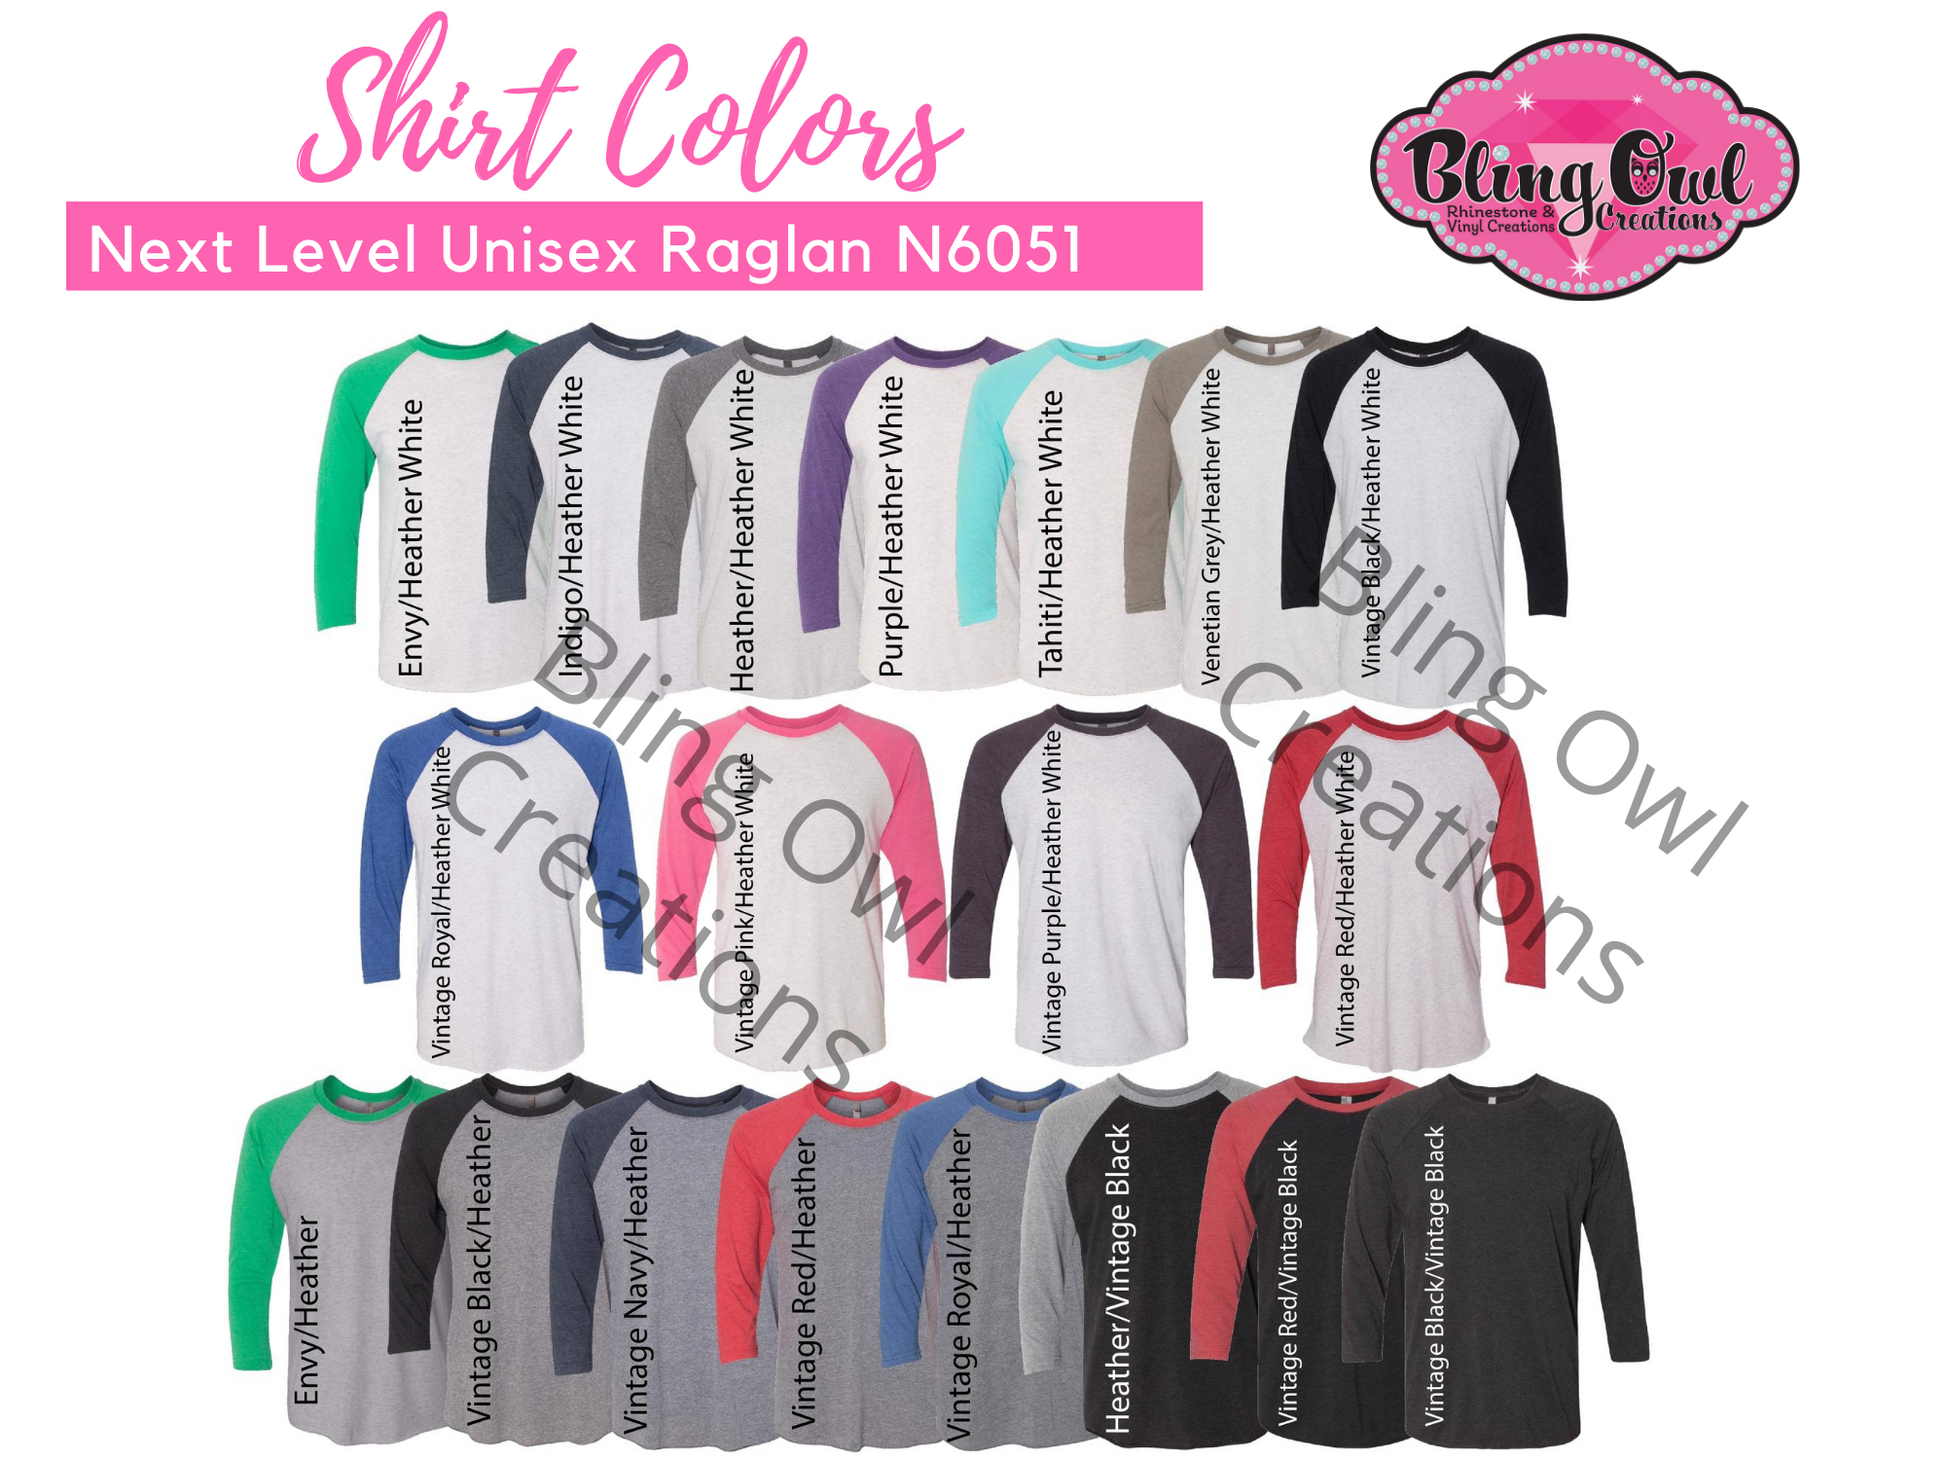 next level unisex raglan shirt color chart